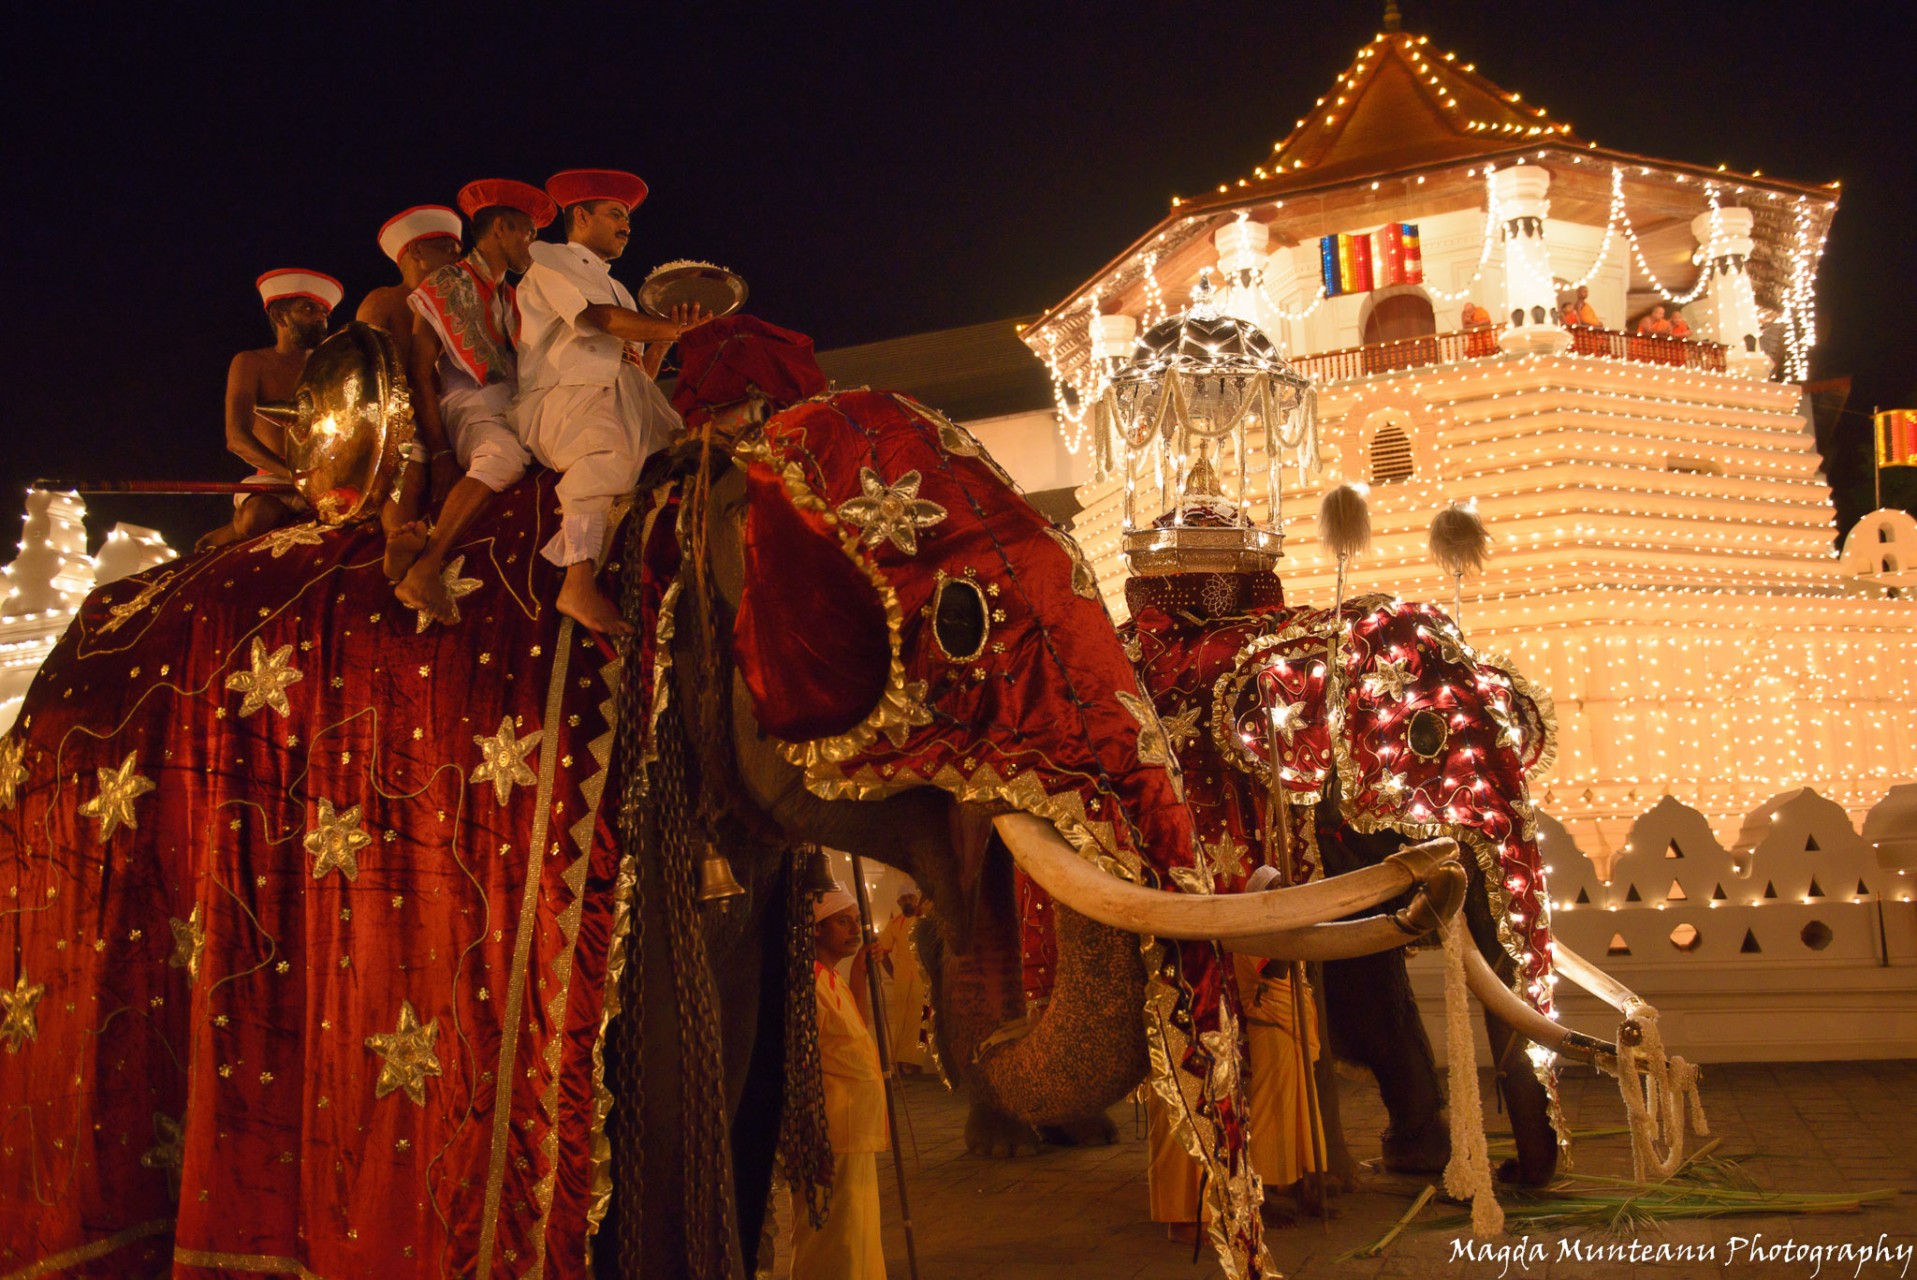 Esala Perahera elephant festival in Kandy, Sri Lanka — Magda Munteanu